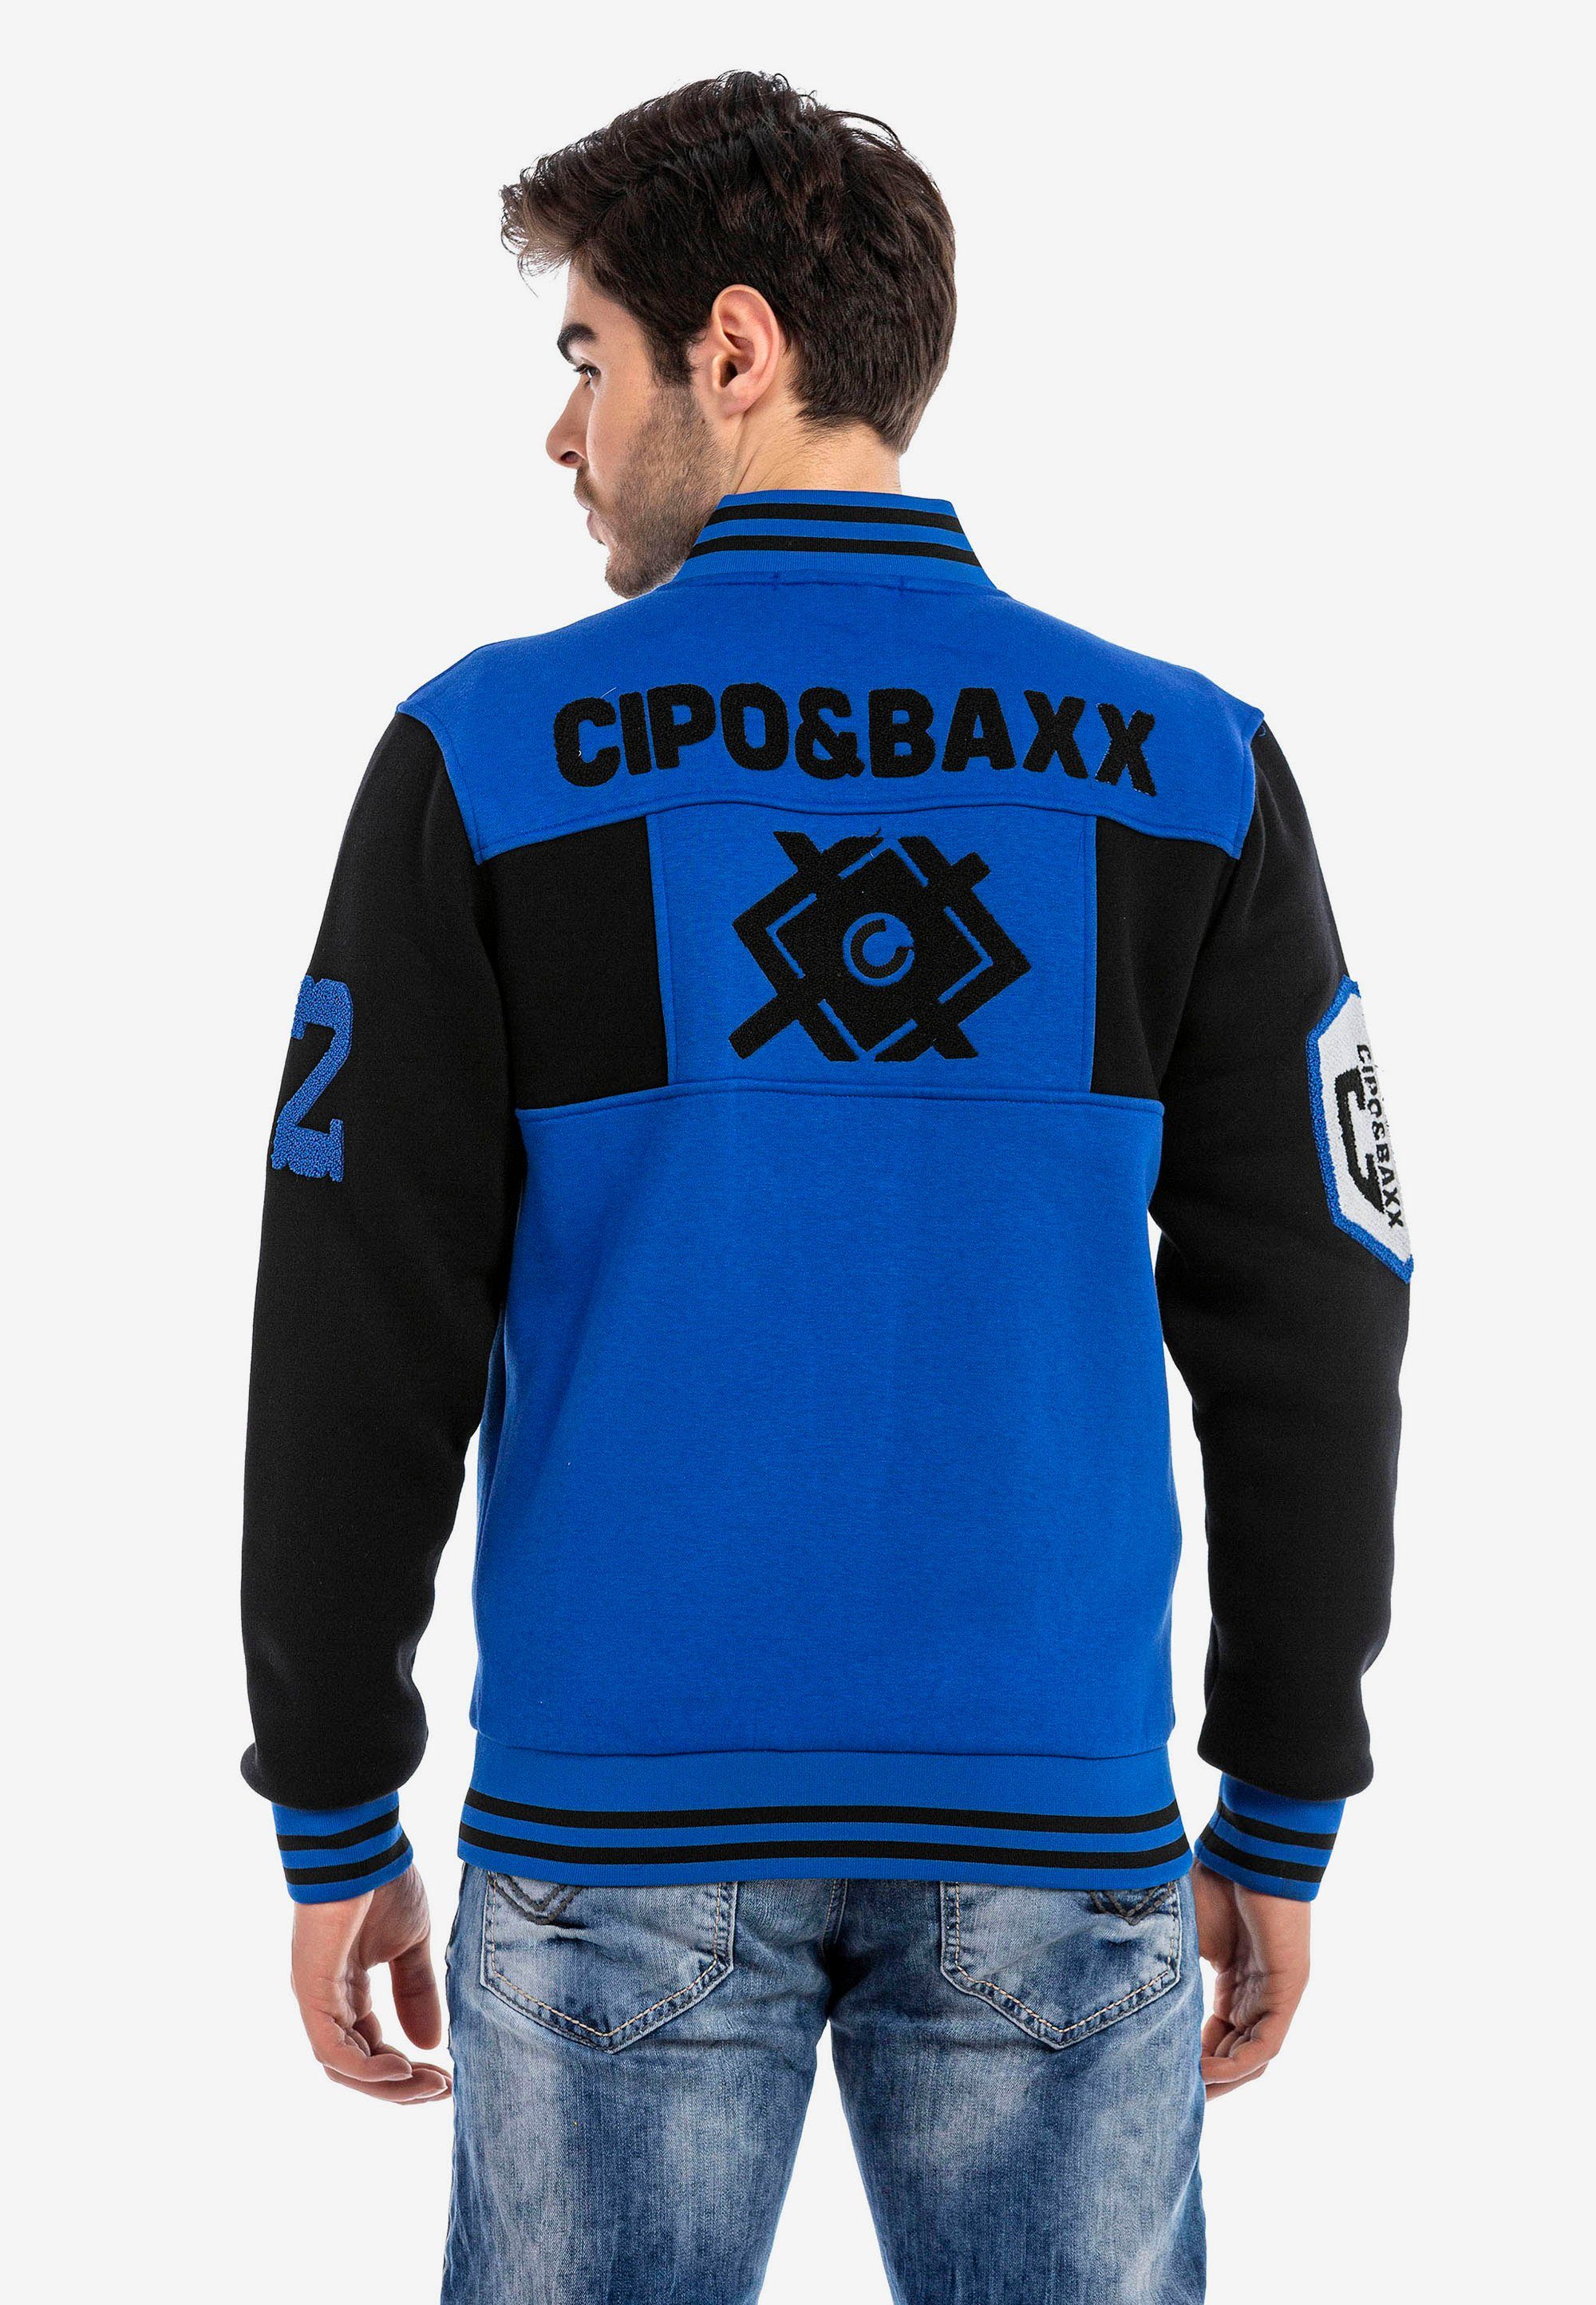 Cipo Baxx sportlichem Sweatjacke in & Design blau-schwarz